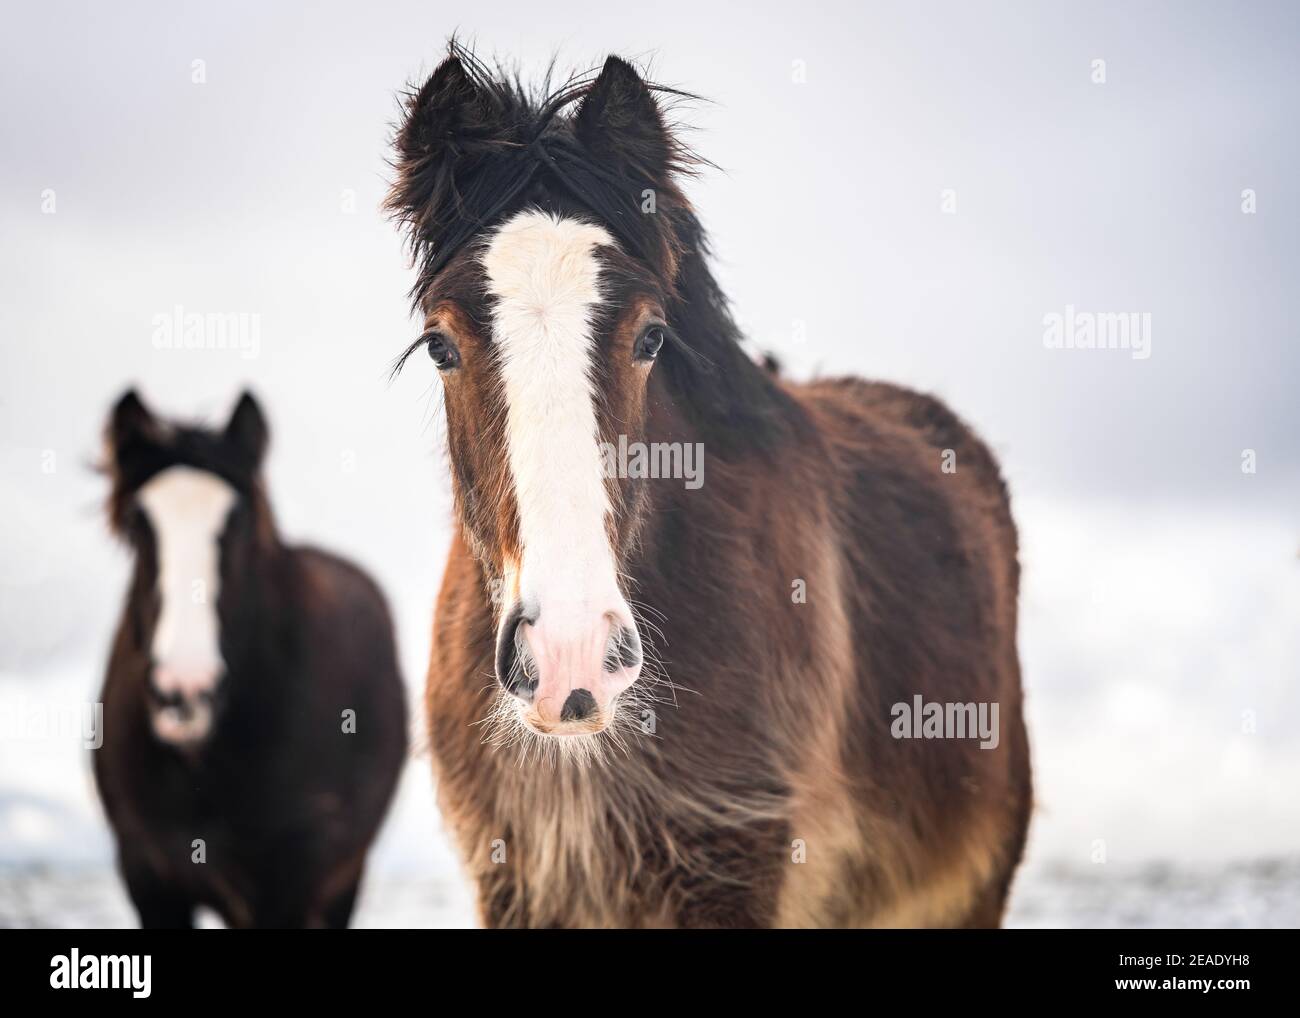 Beautiful big Irish Gypsy cob horses young foals roaming wild in heavy snow on ground walking towards camera through cold deep snowy winter field Stock Photo